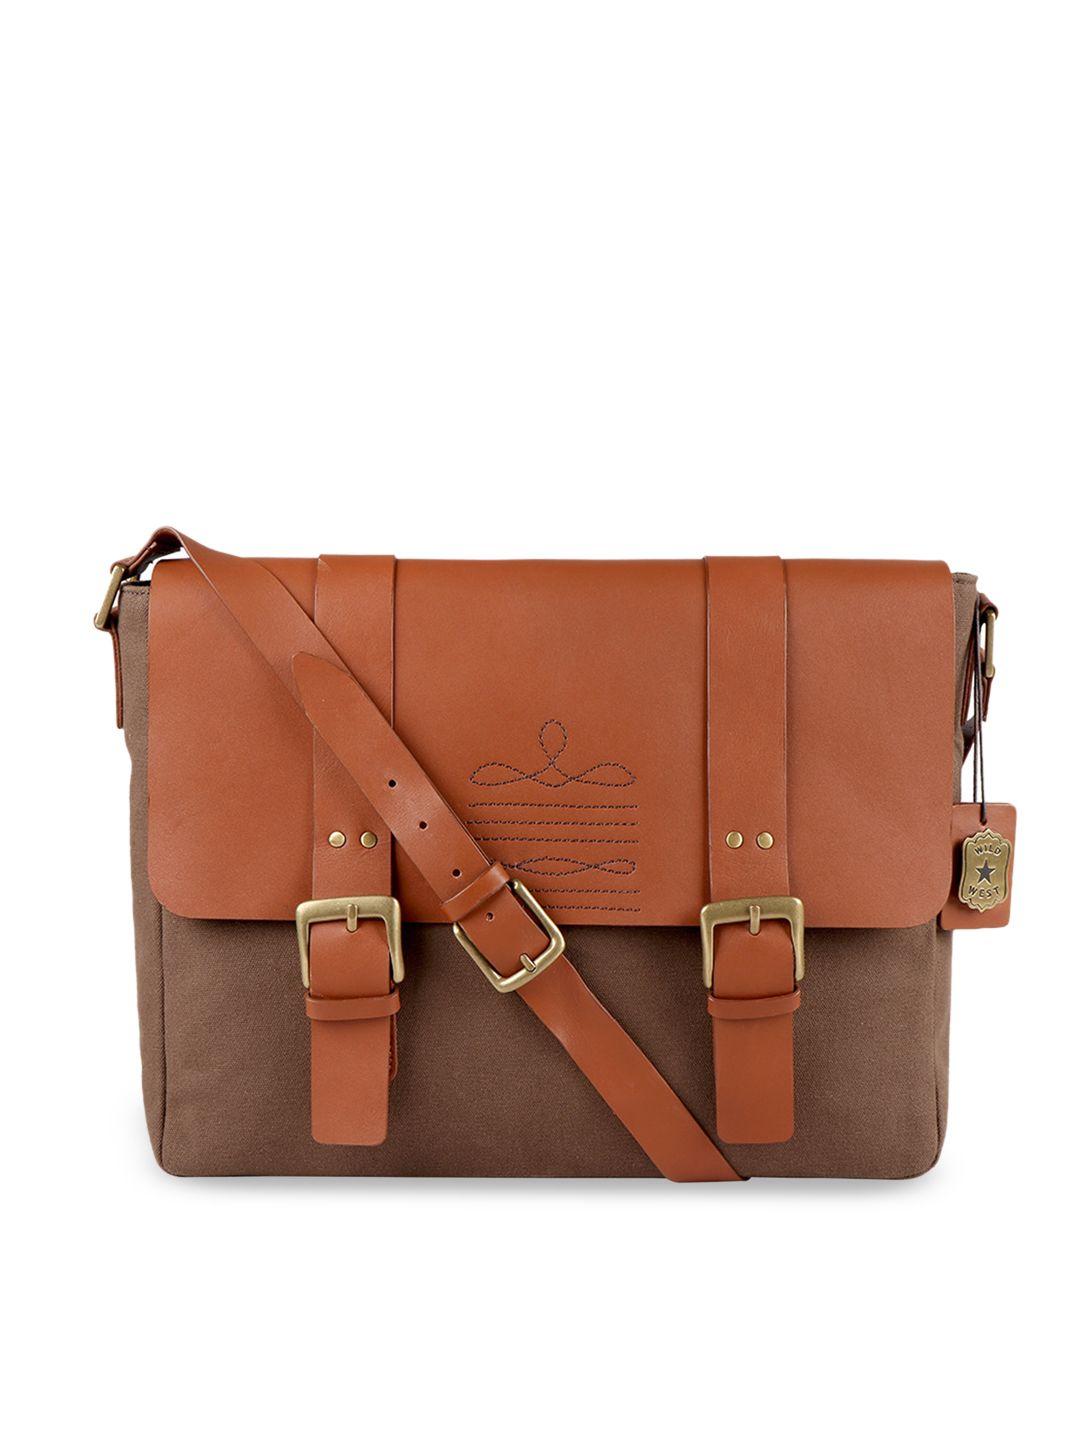 hidesign men tan brown solid leather messenger bag